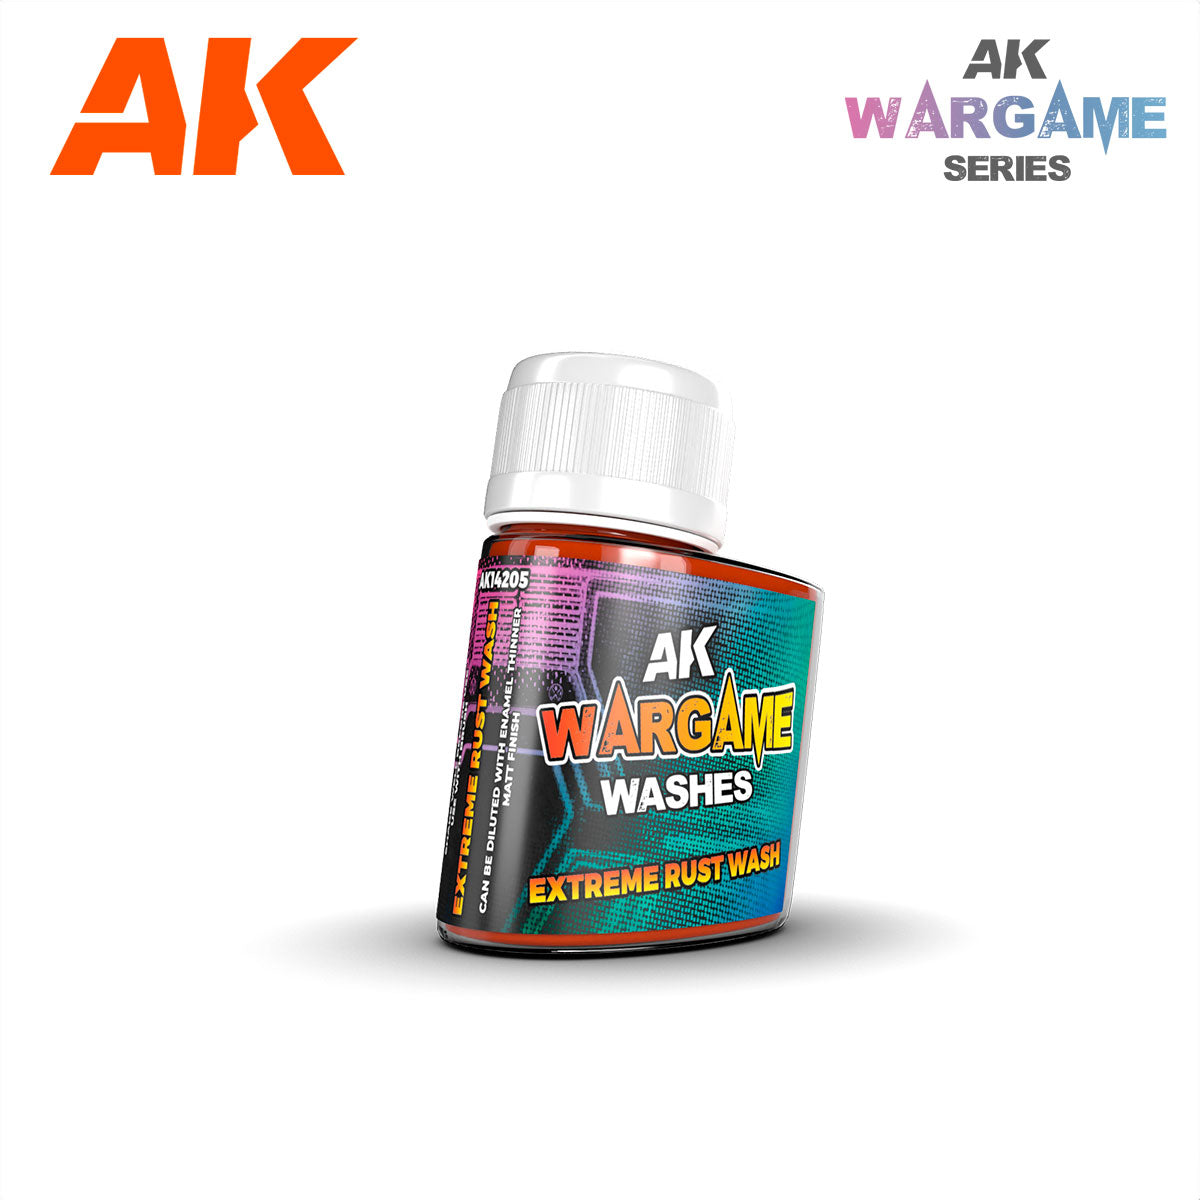 AK14205 - Extreme Rust wash (35ml) - Wargame Wash